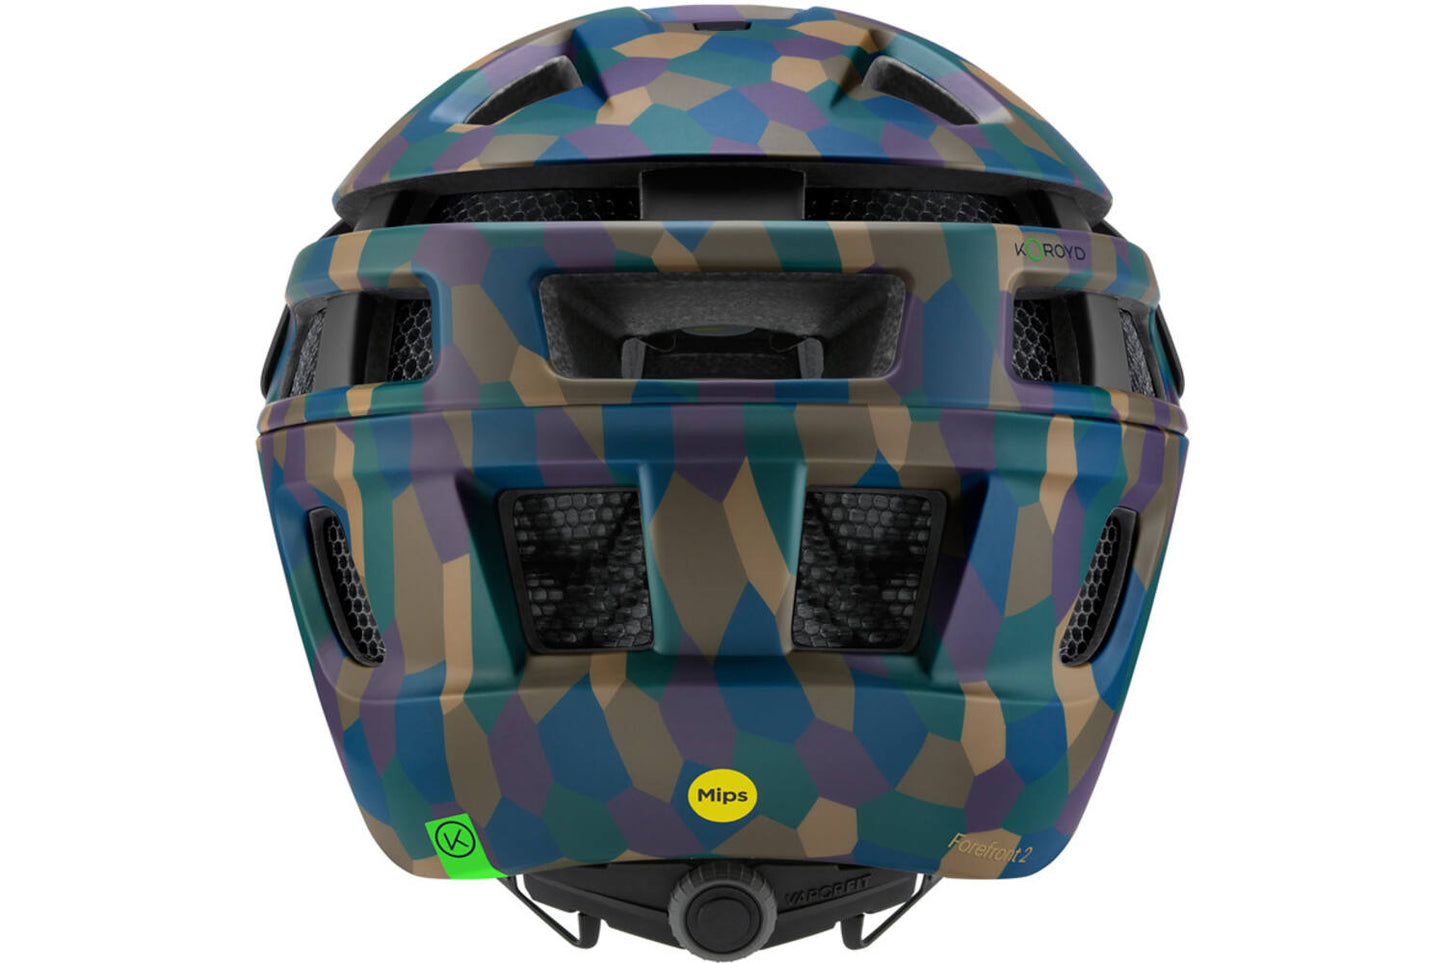 Smith Forefront 2 MIPS MTB Helmet - Matt Trail Camo